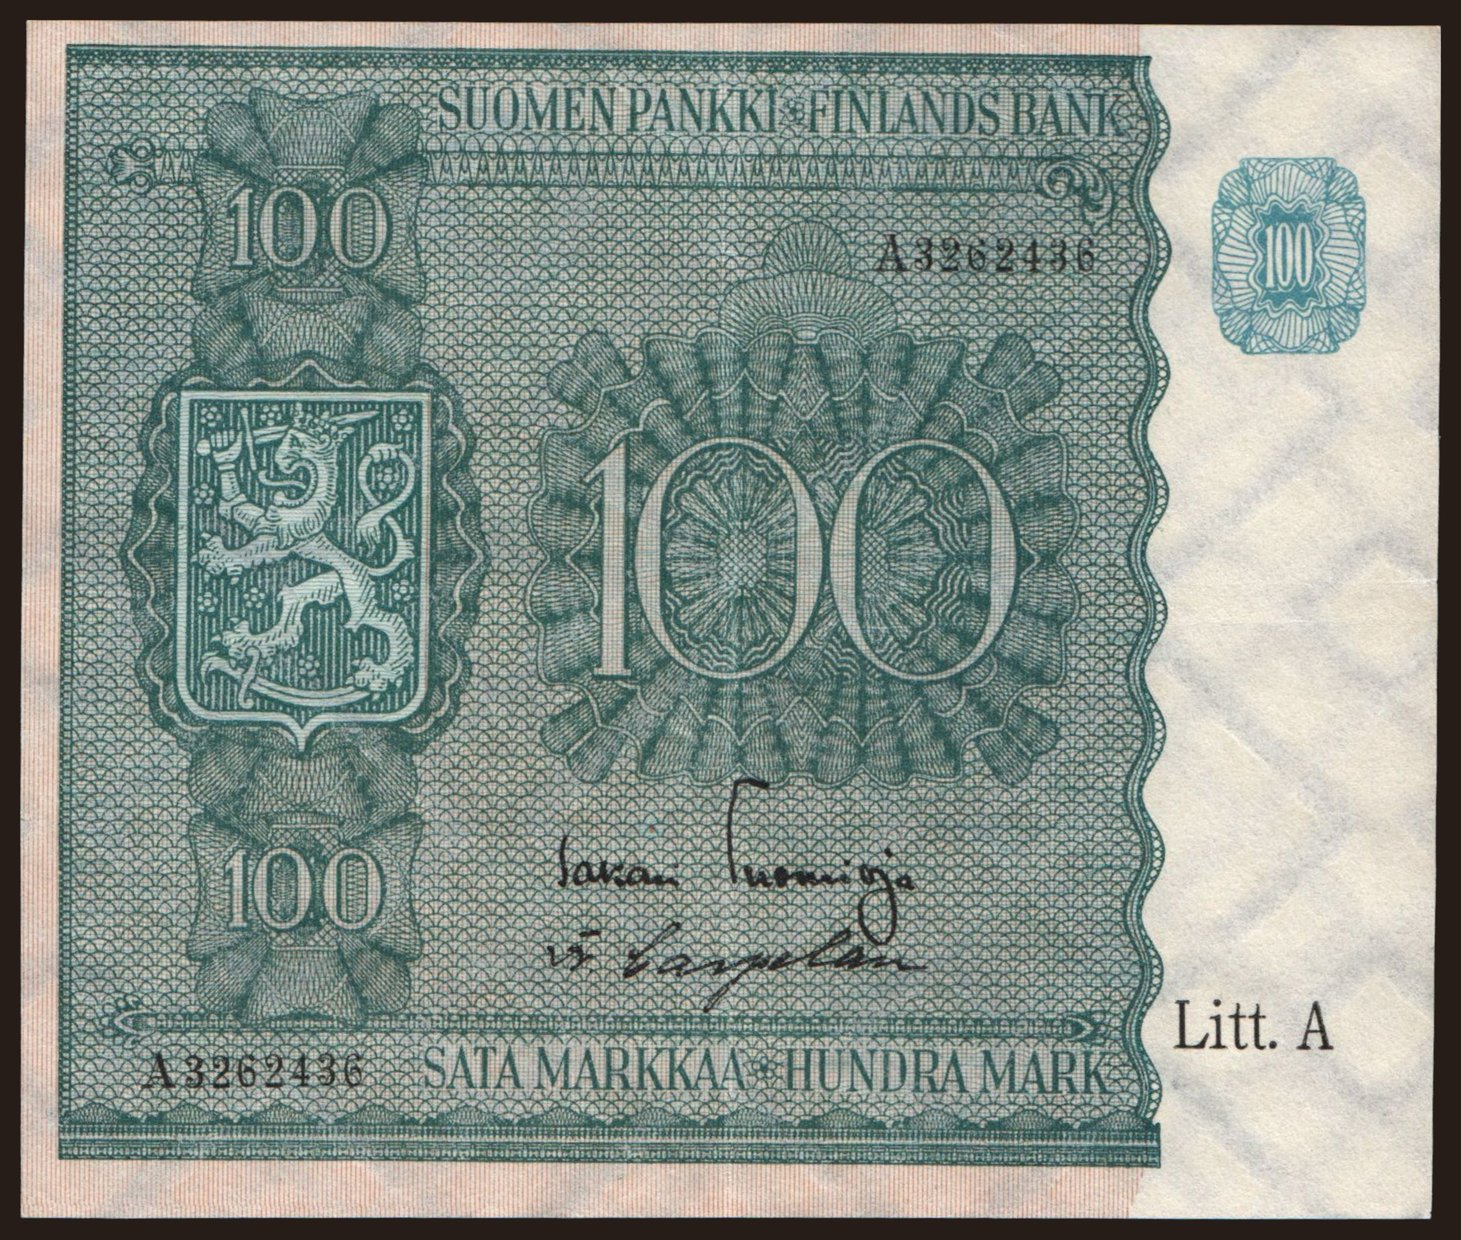 100 markkaa, 1945, Litt. A